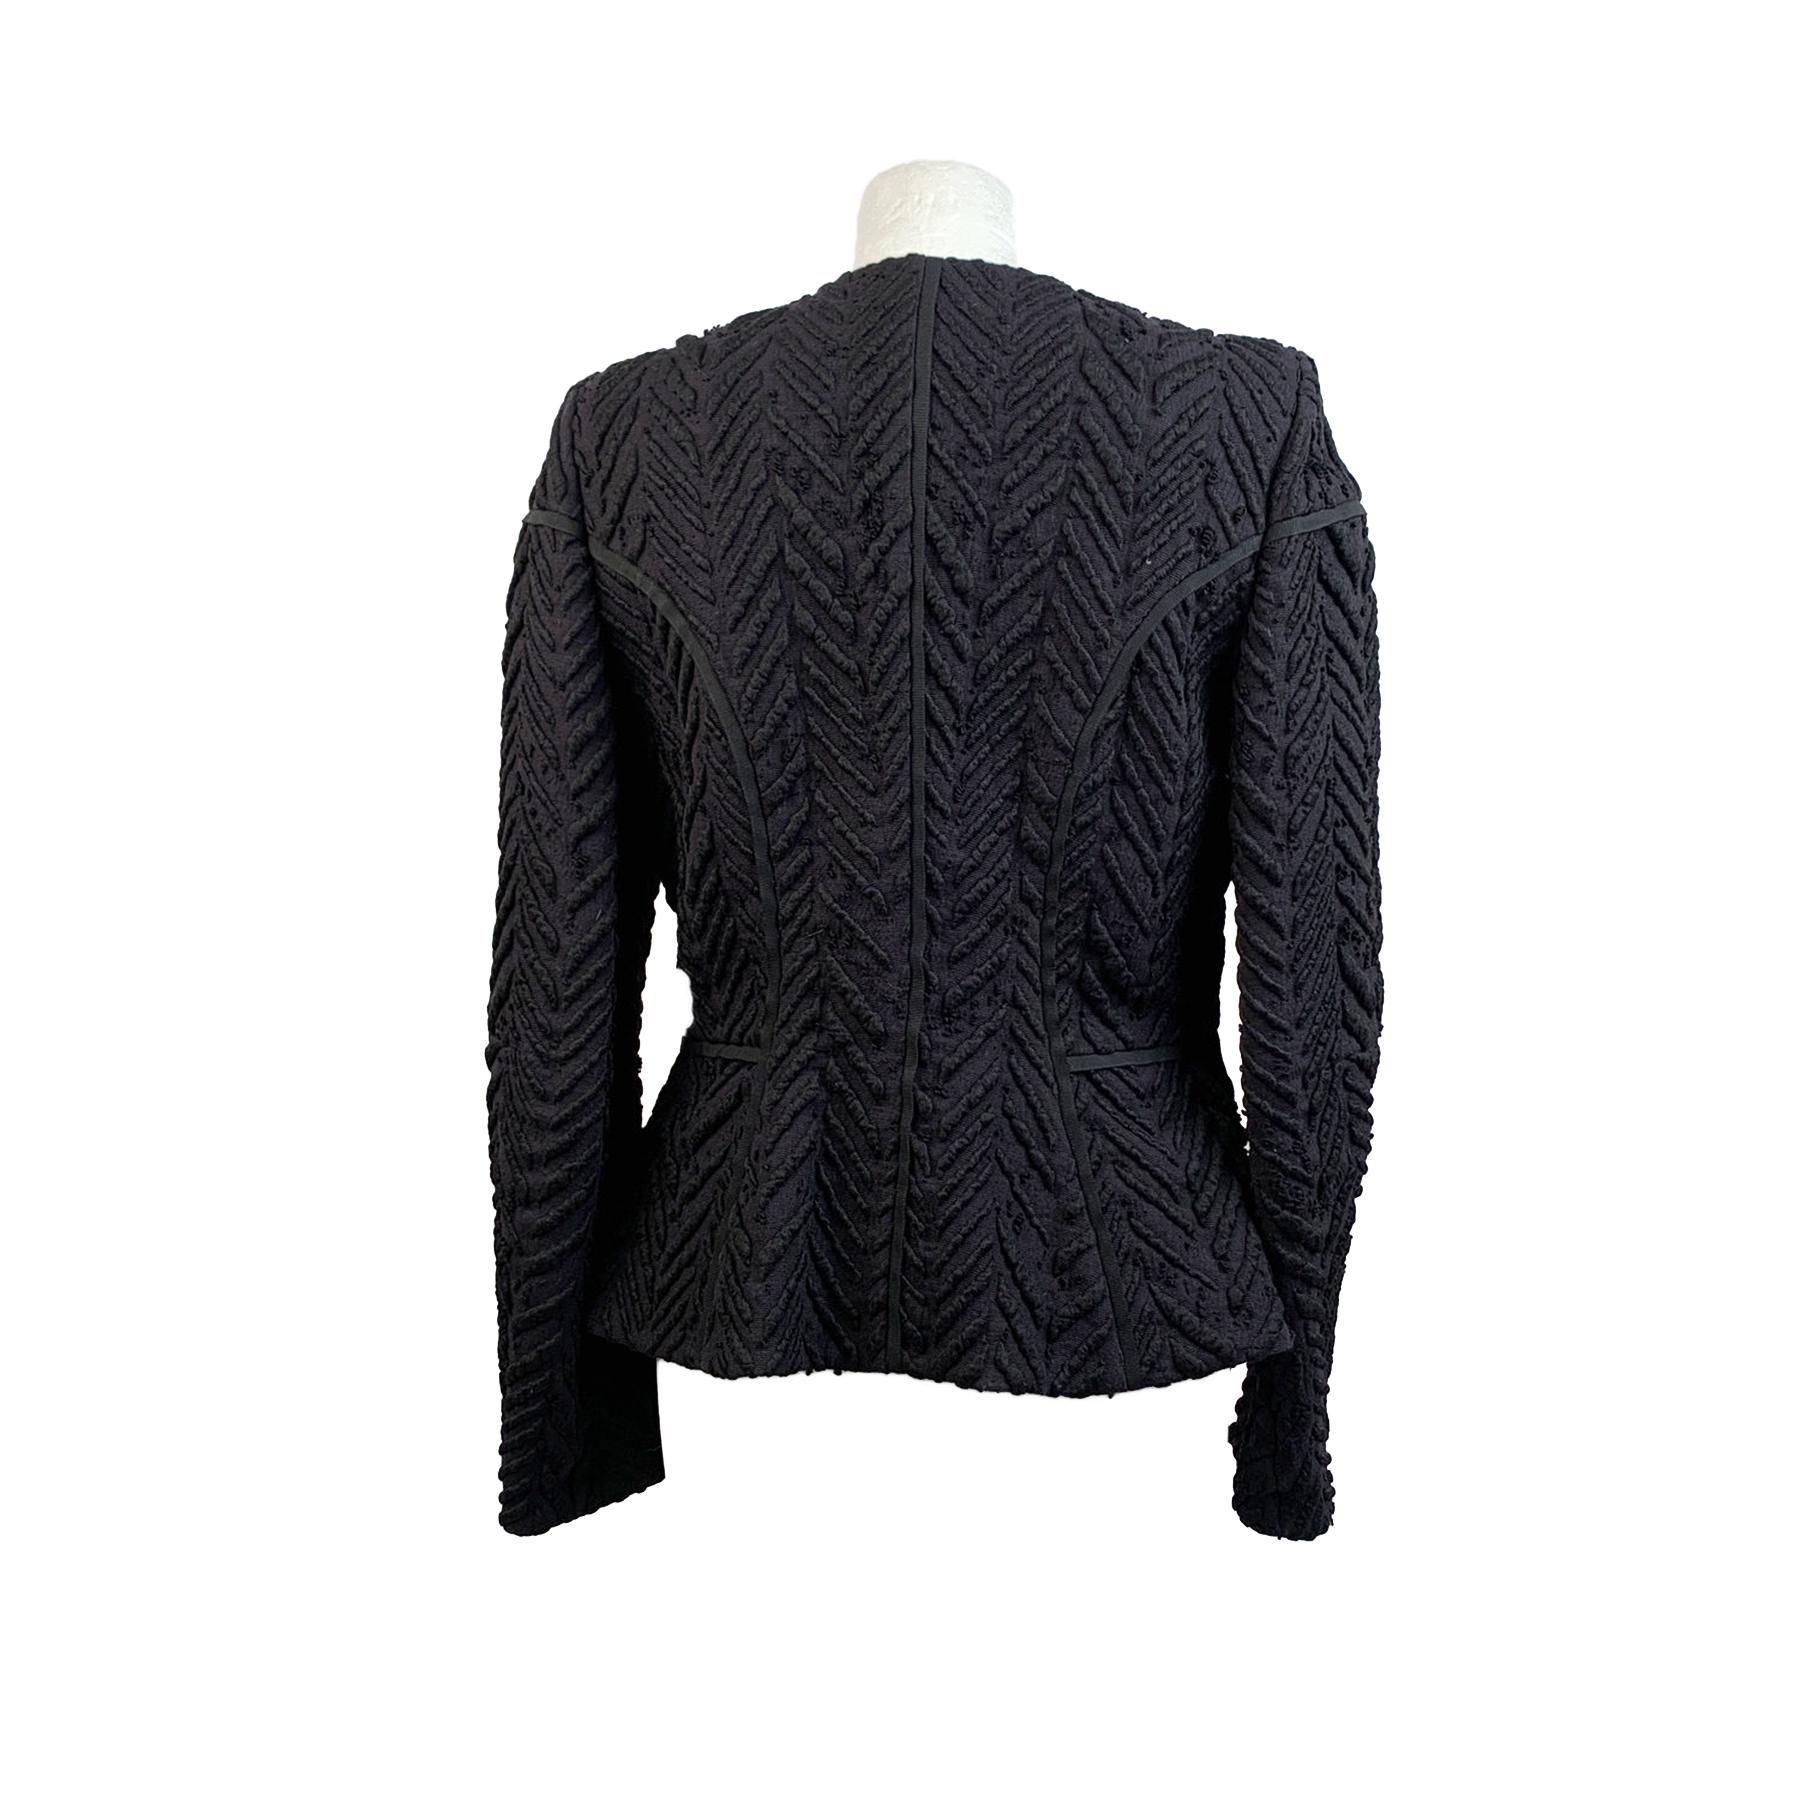 Women's Giorgio Armani Black Label Vintage Textured Wool Blazer Jacket Size 46